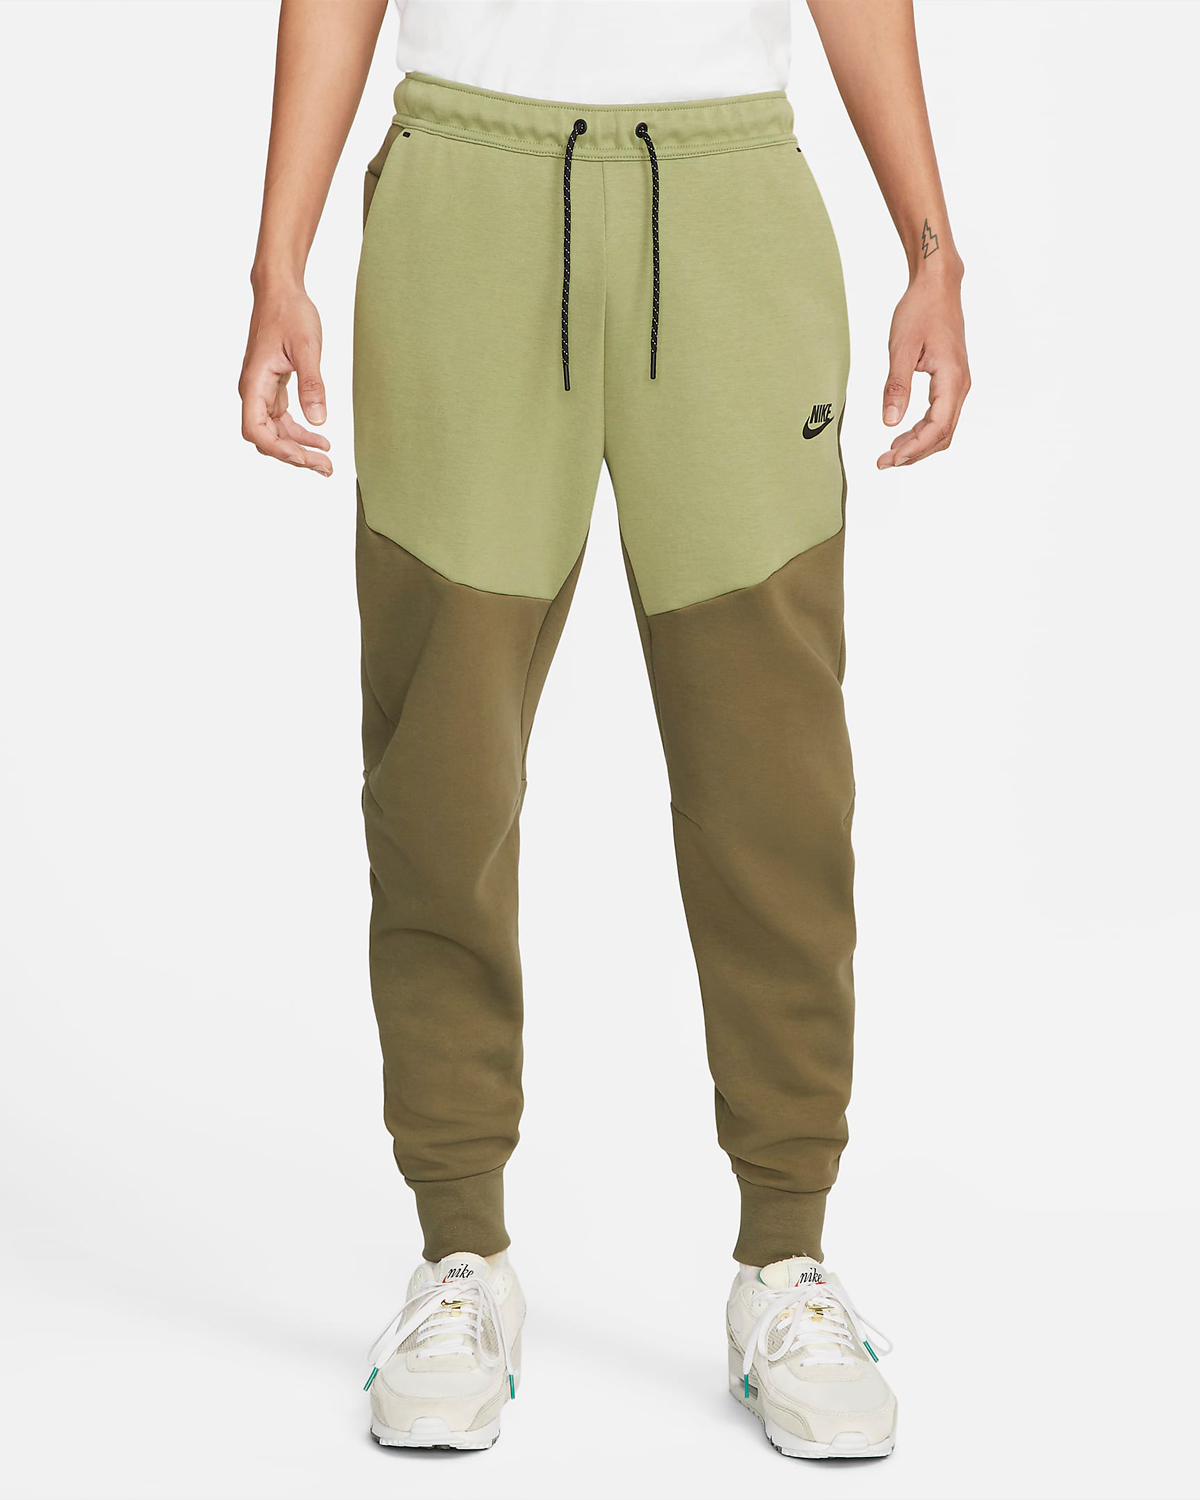 Nike-Tech-Fleece-Joggers-Medium-Olive-Alligator